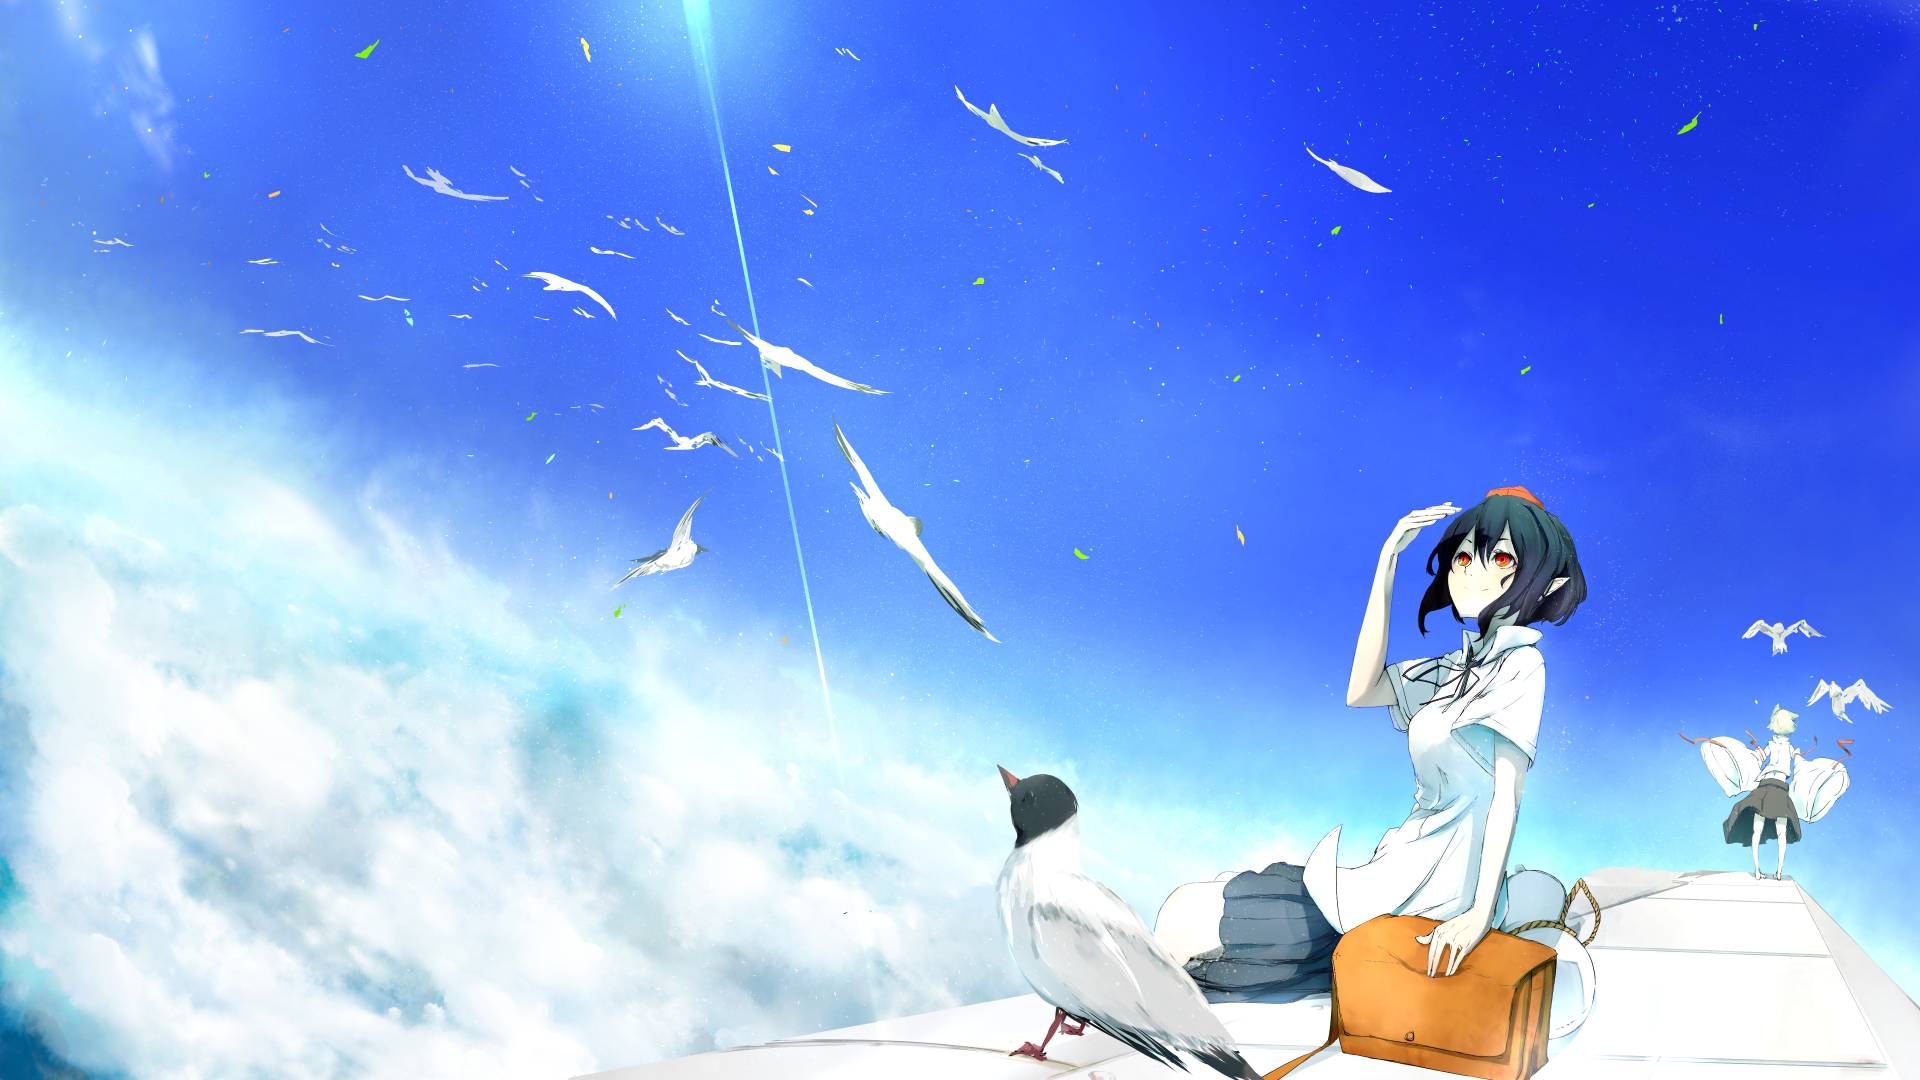 Blue Anime Scenery HD Wallpaper 1920x1080 ID45761